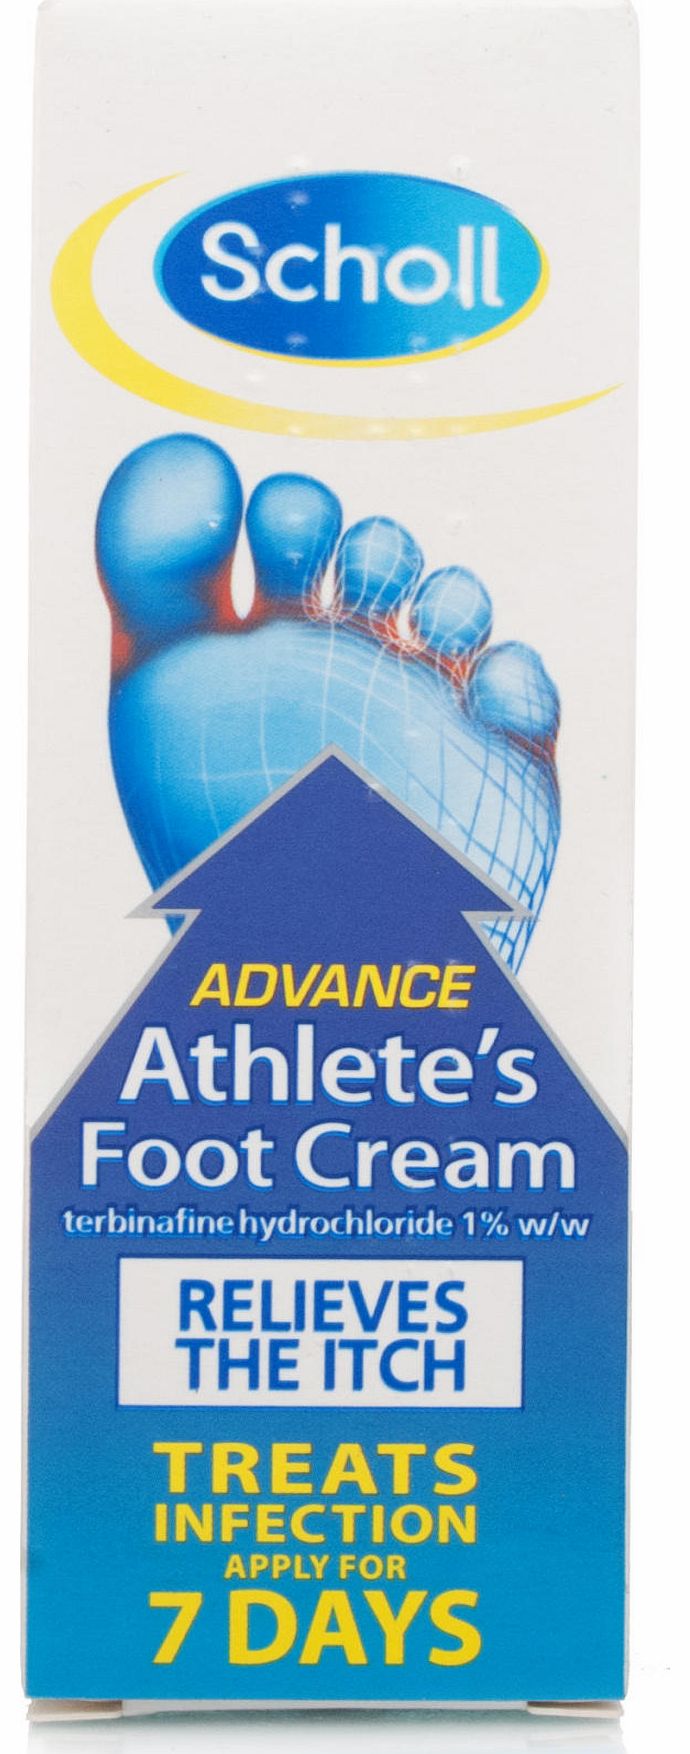 Advance Athlete's Foot Cream